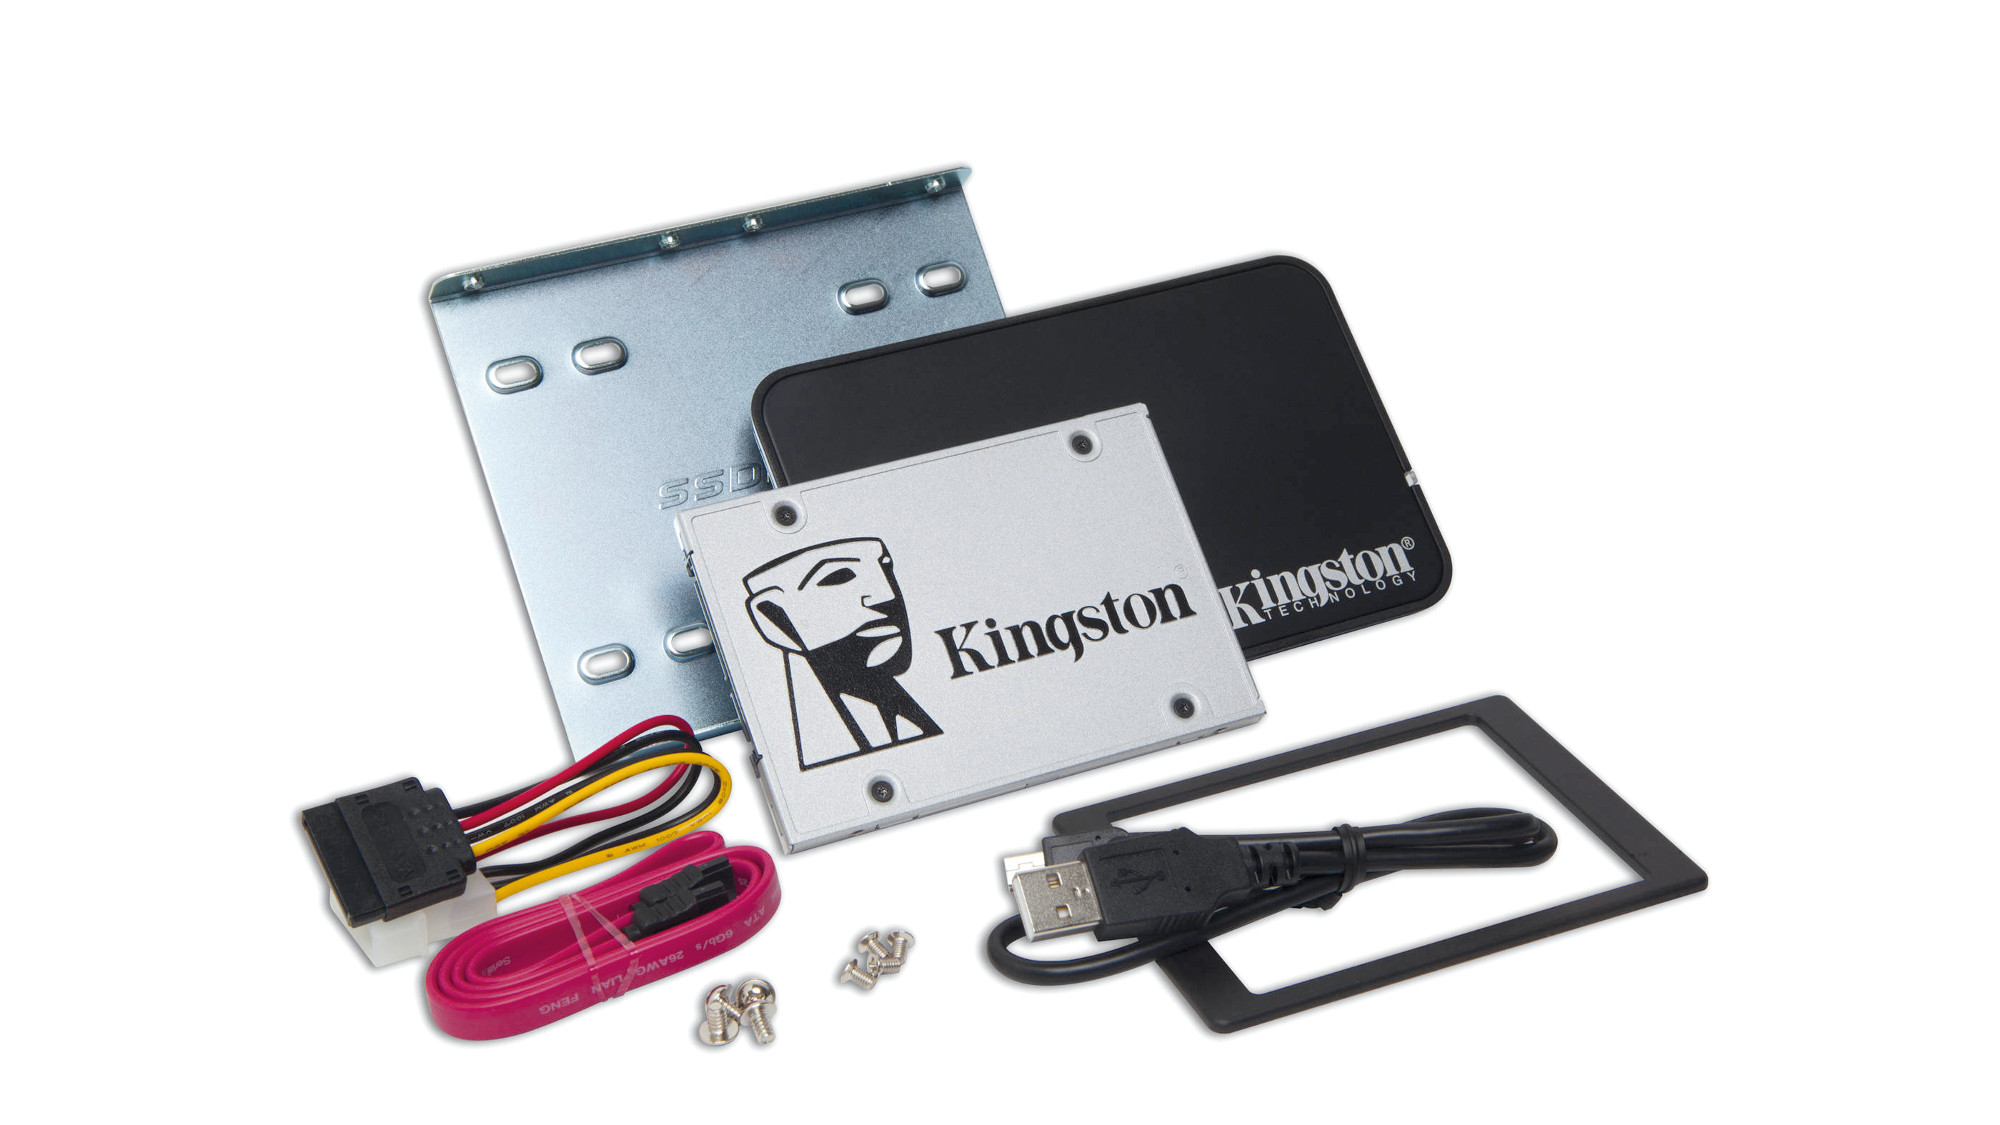 Kingston SSDNow UV400 Upgrade review